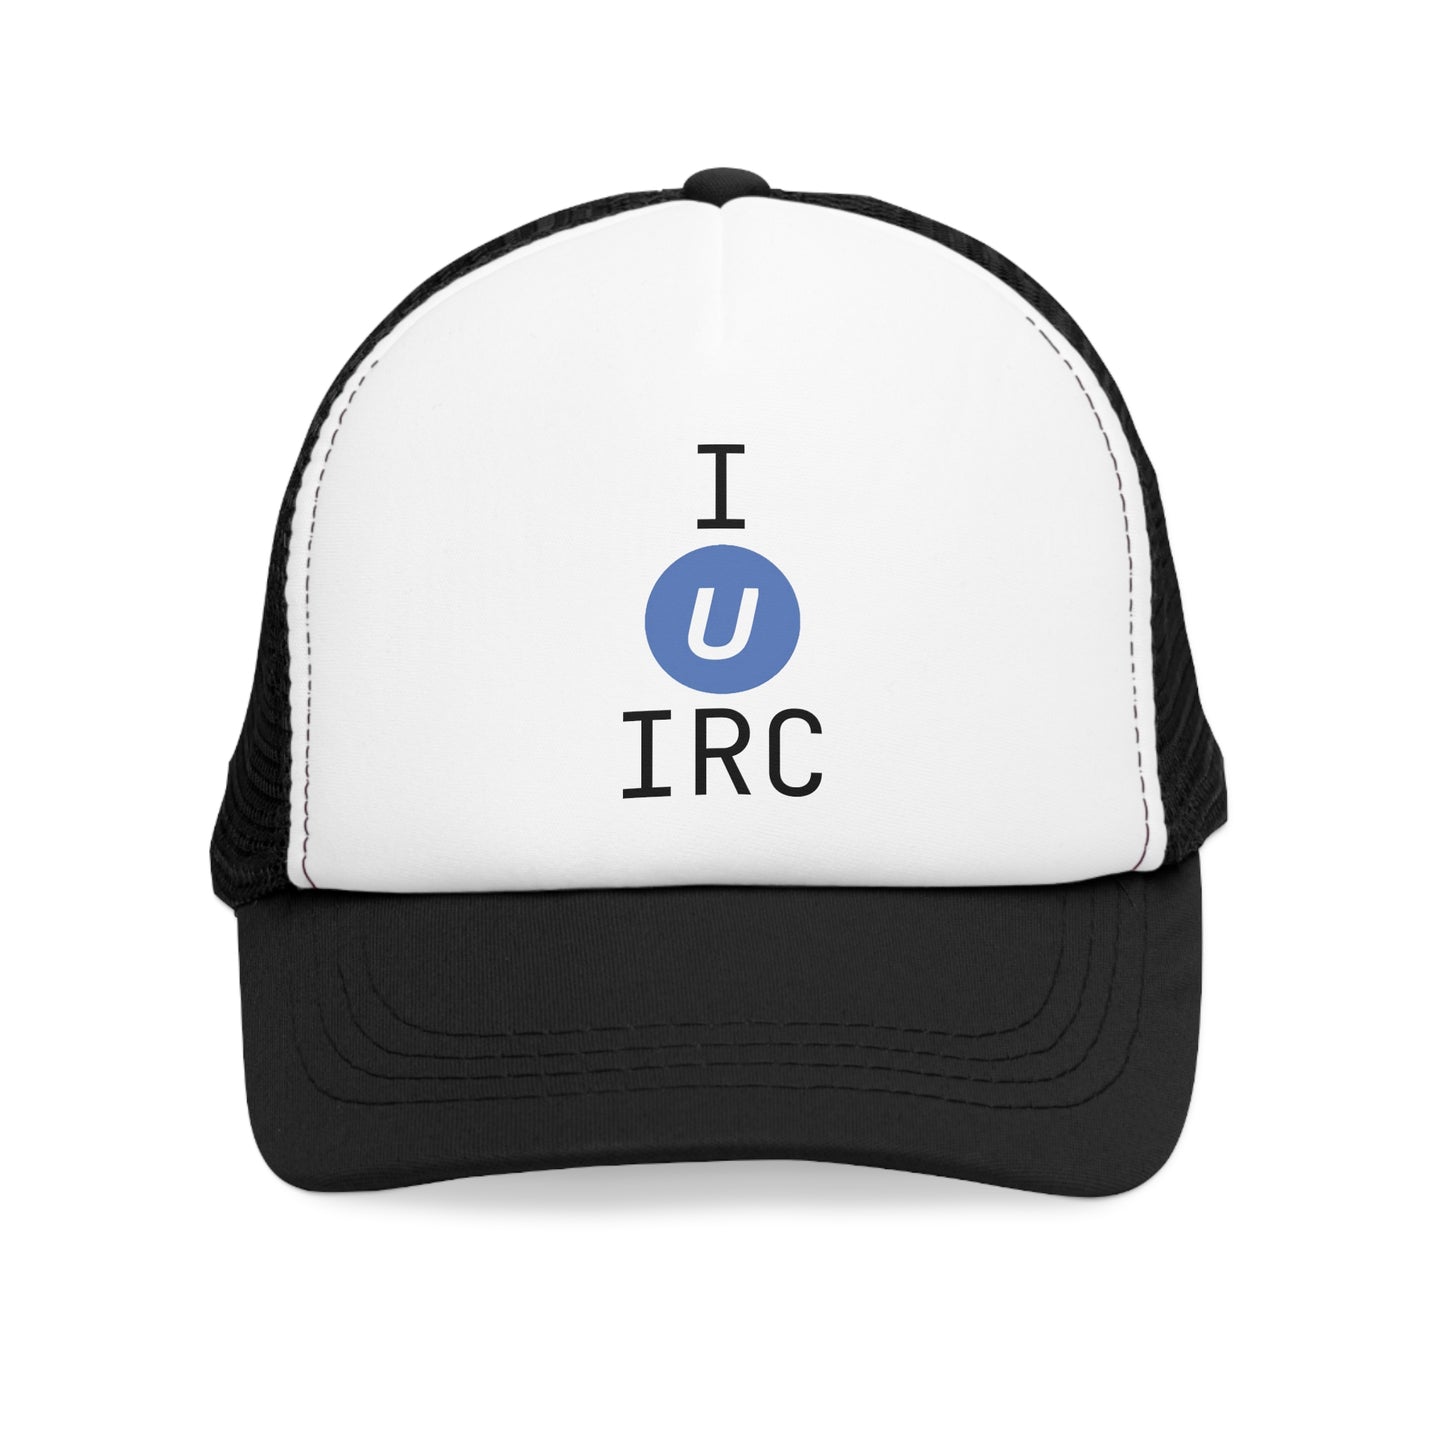 Clothing - I (U) IRC - UnrealIRCd Mesh Cap